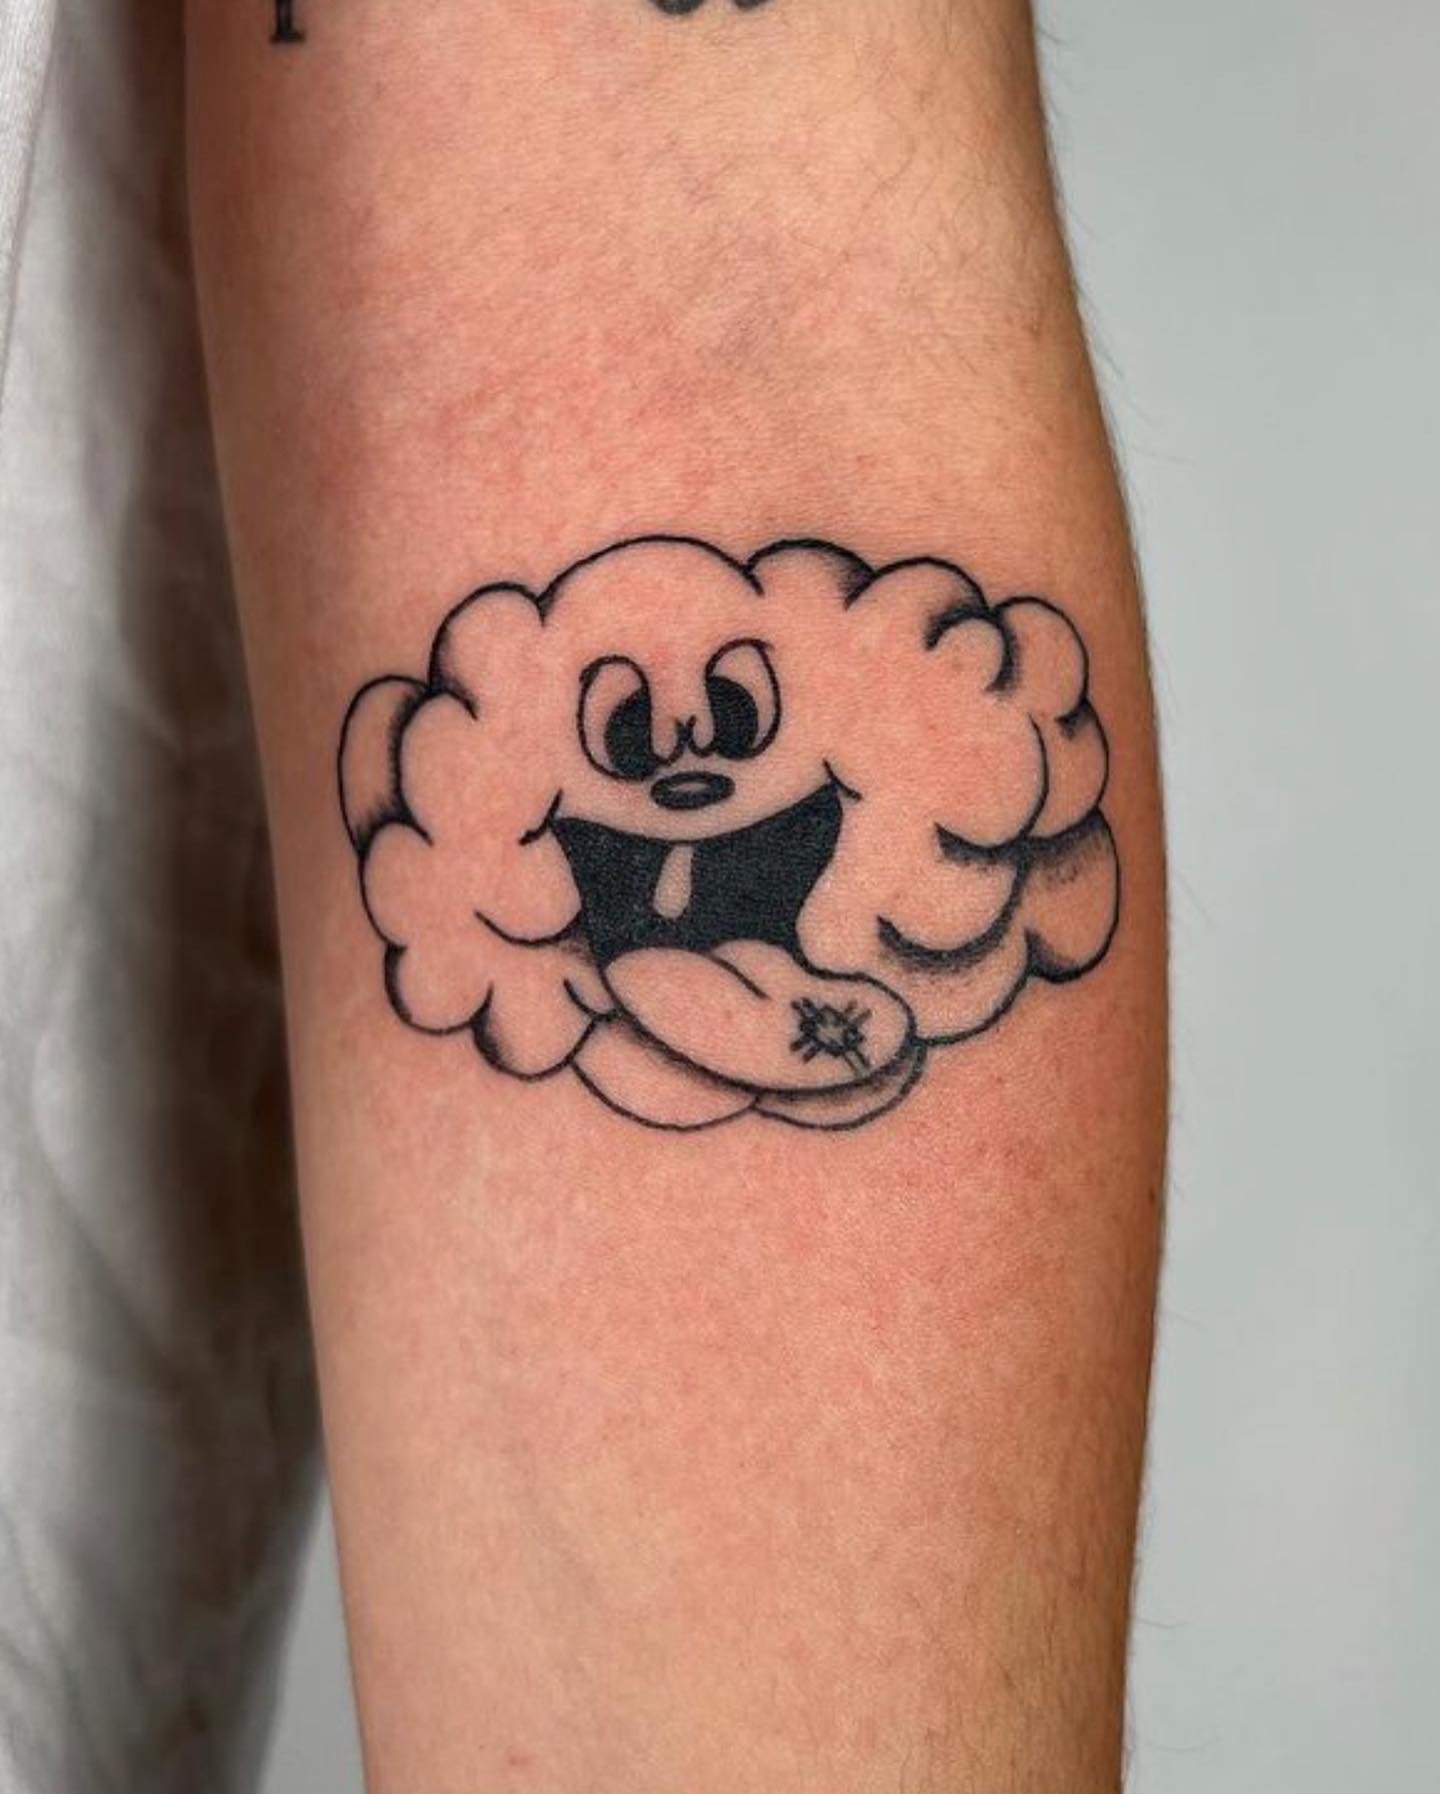 Tattoo Acid Cloud.jpeg